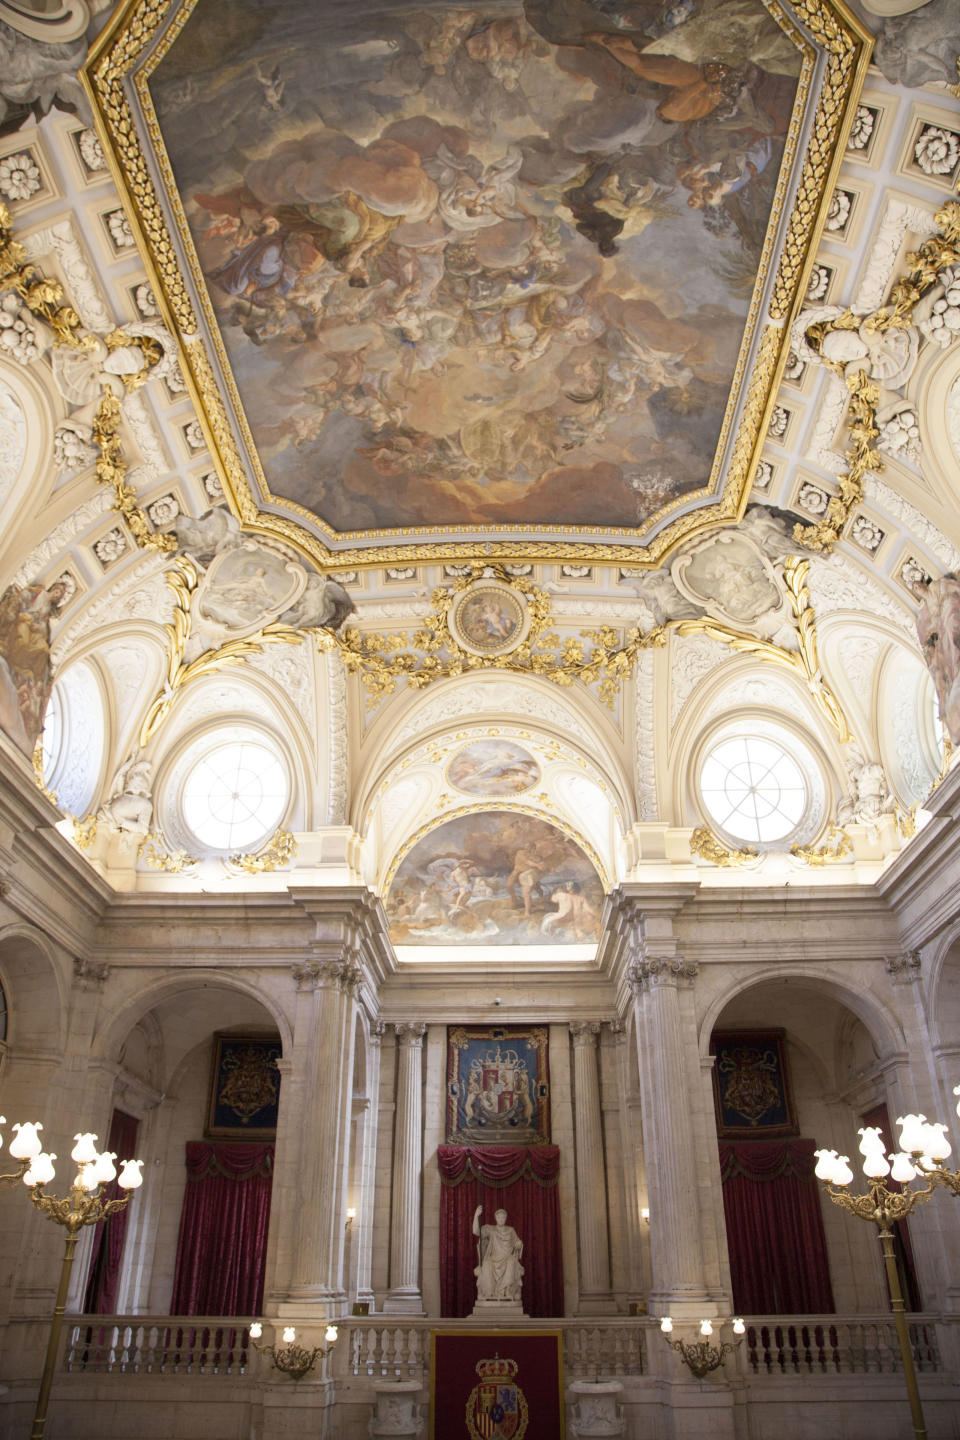 Inside the Palace...